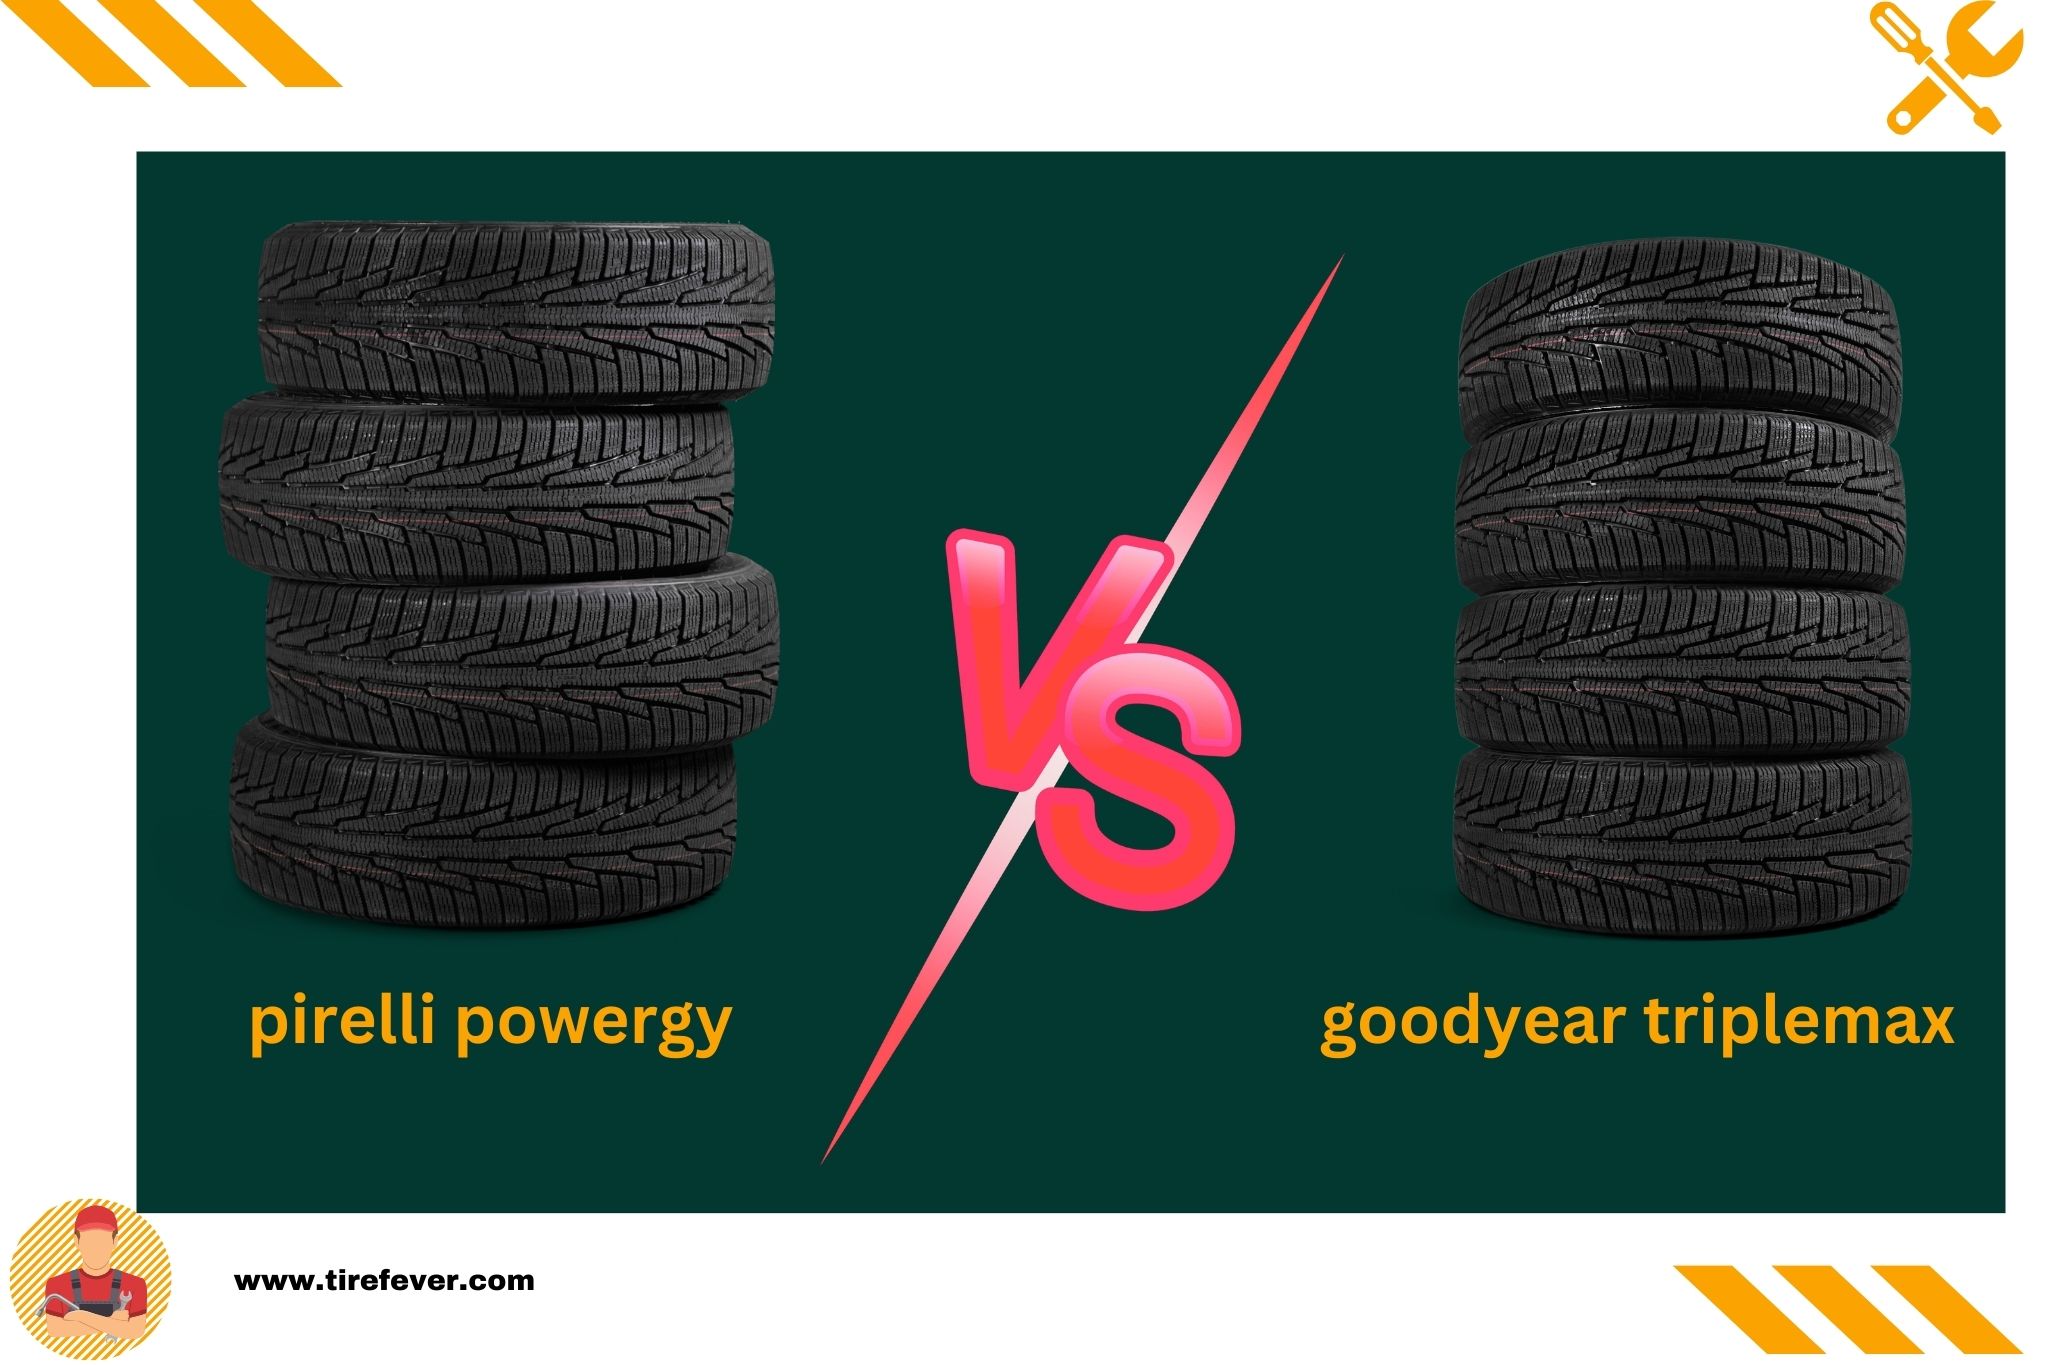 pirelli powergy vs goodyear triplemax